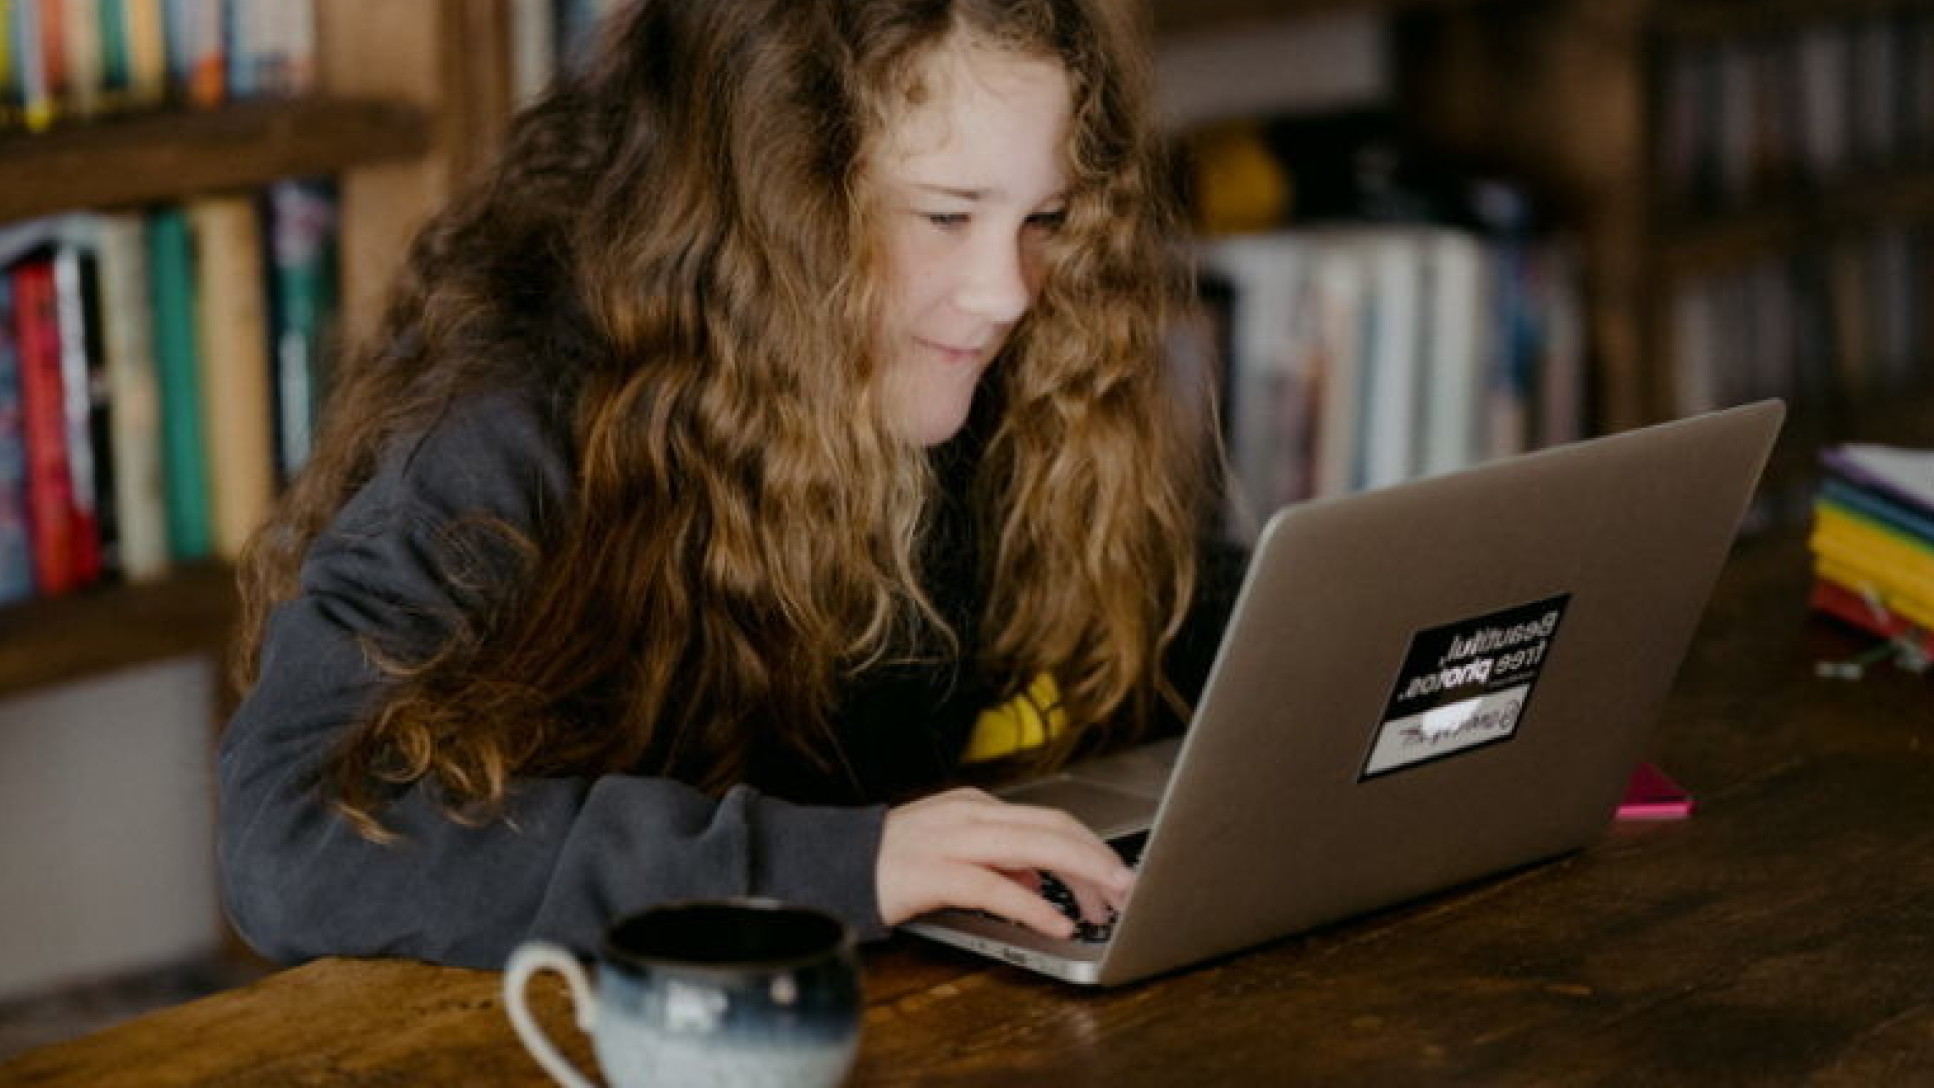 A girl types on a laptop